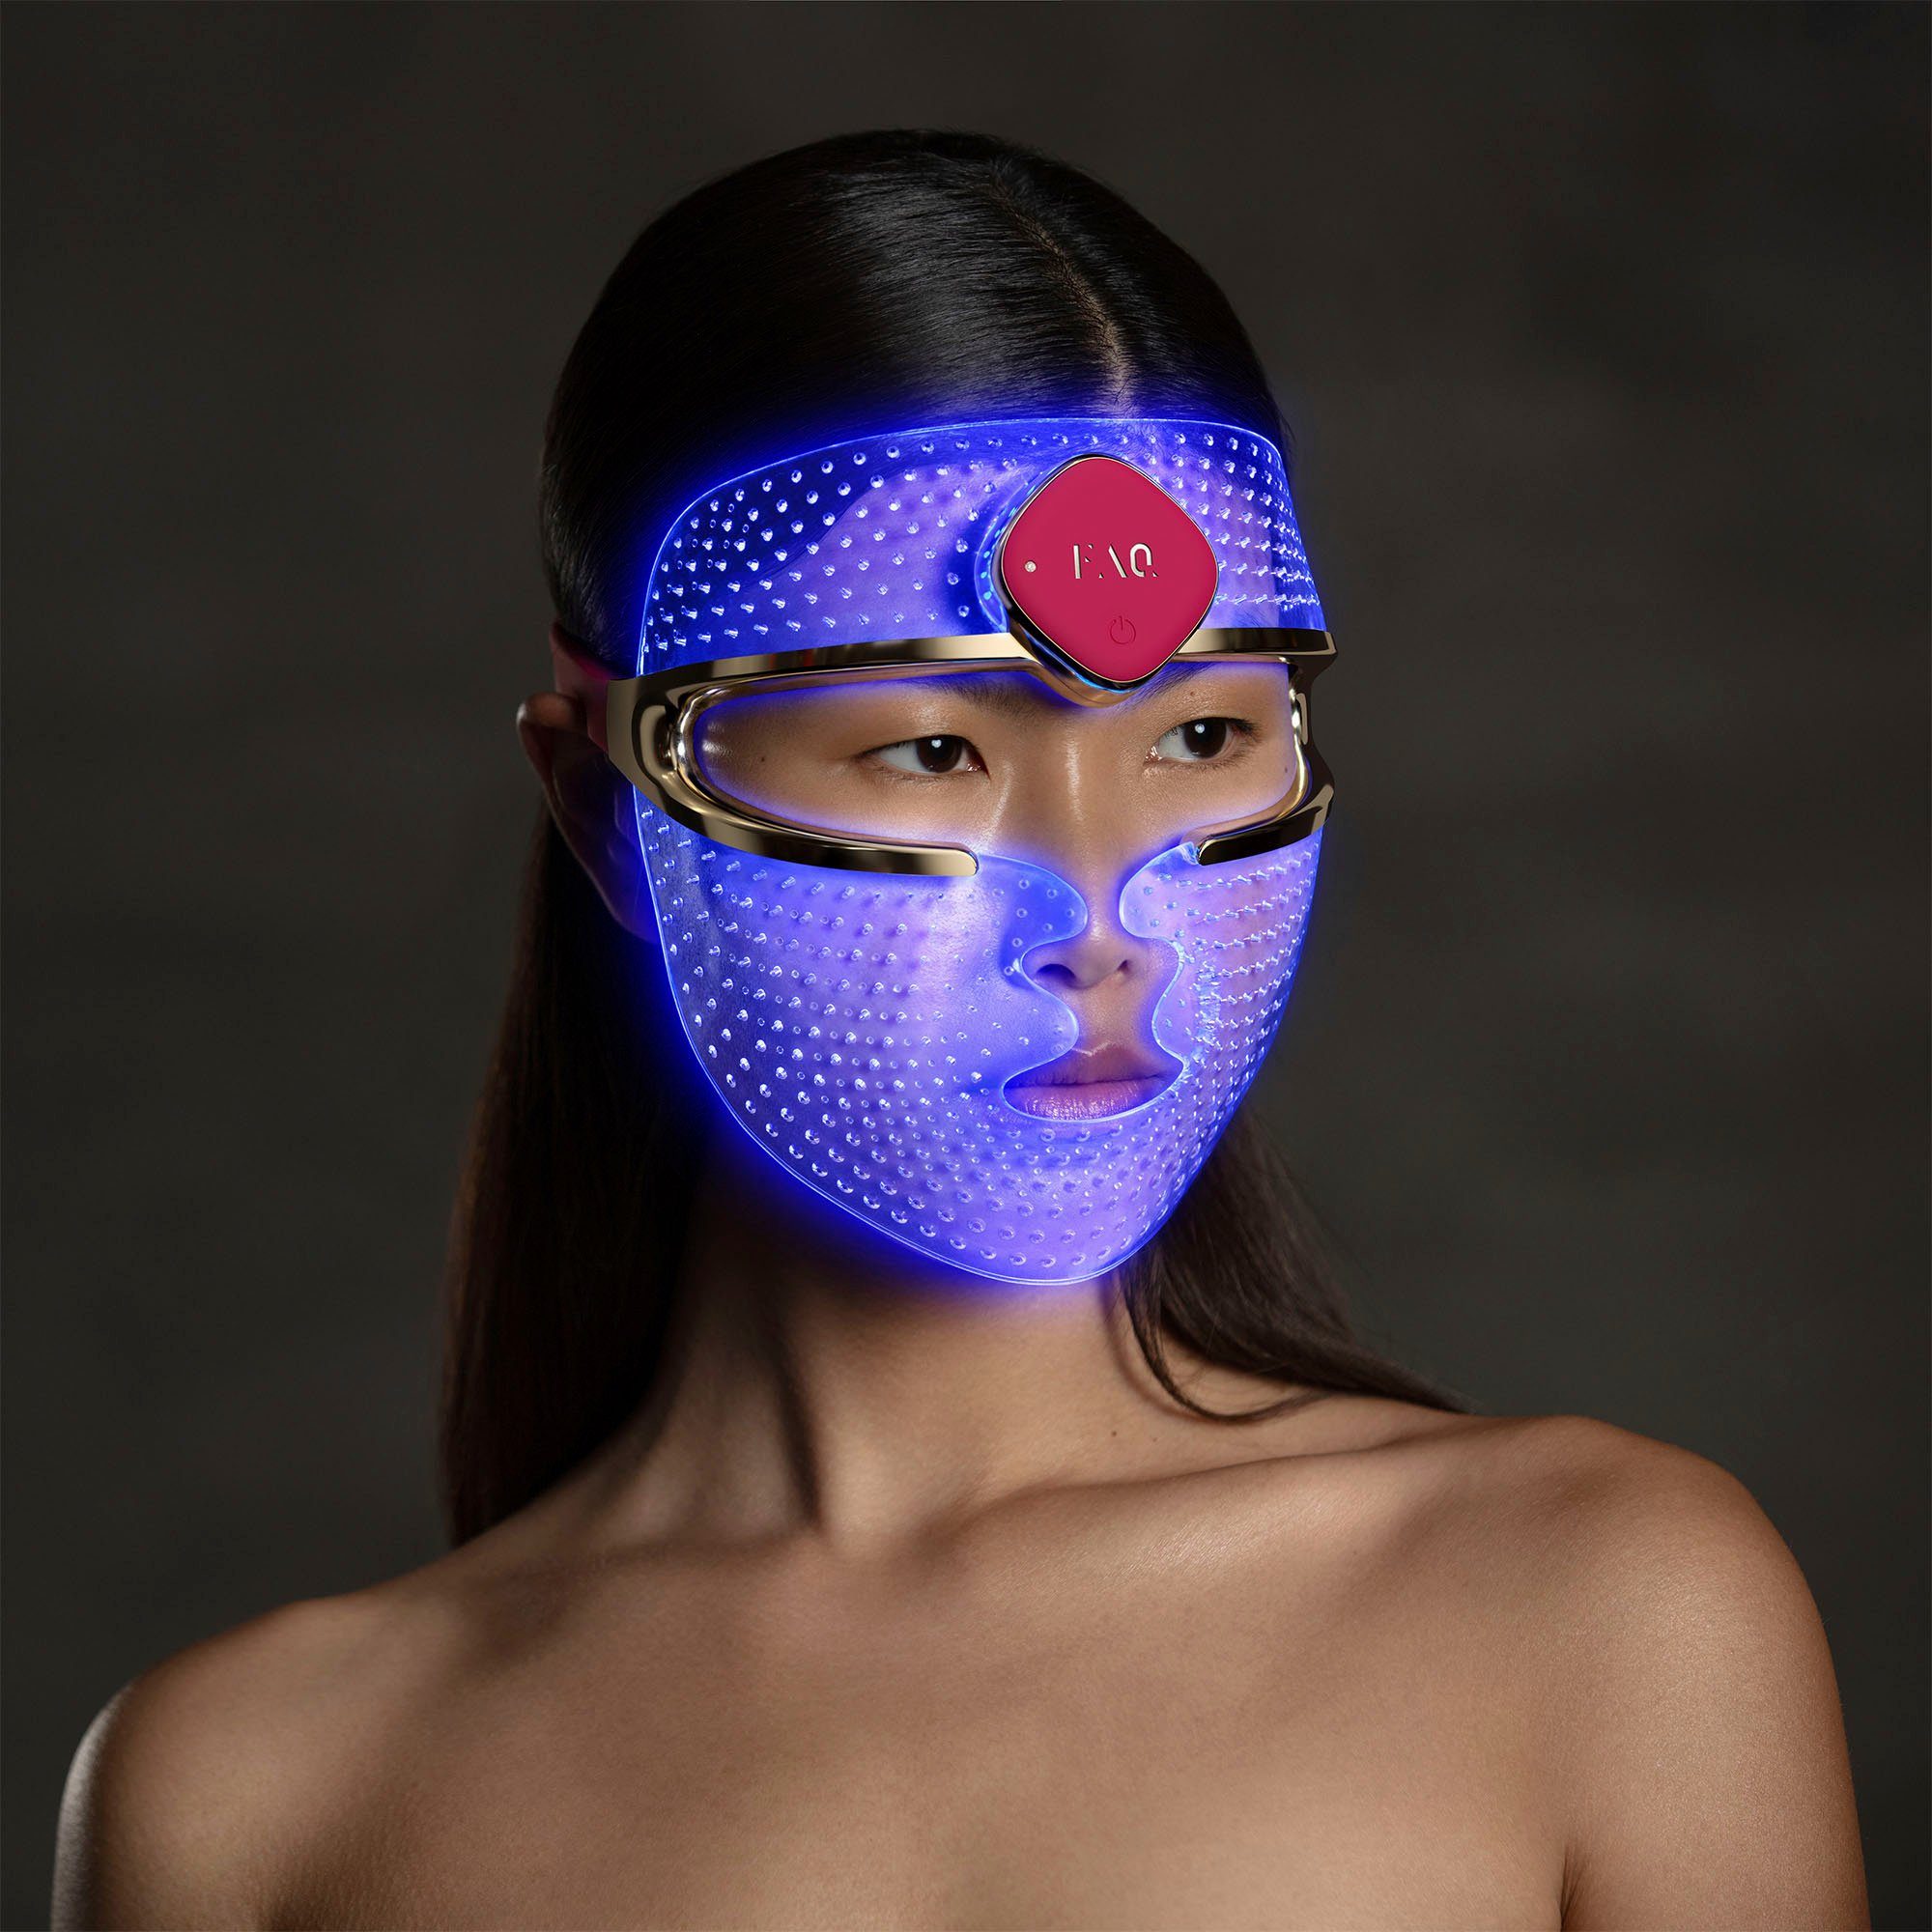 FAQ™ Mikrodermabrasionsgerät FAQ™ 201 Silicone Gesichtsmaske LED 3 Face LED Farben Mask, mit